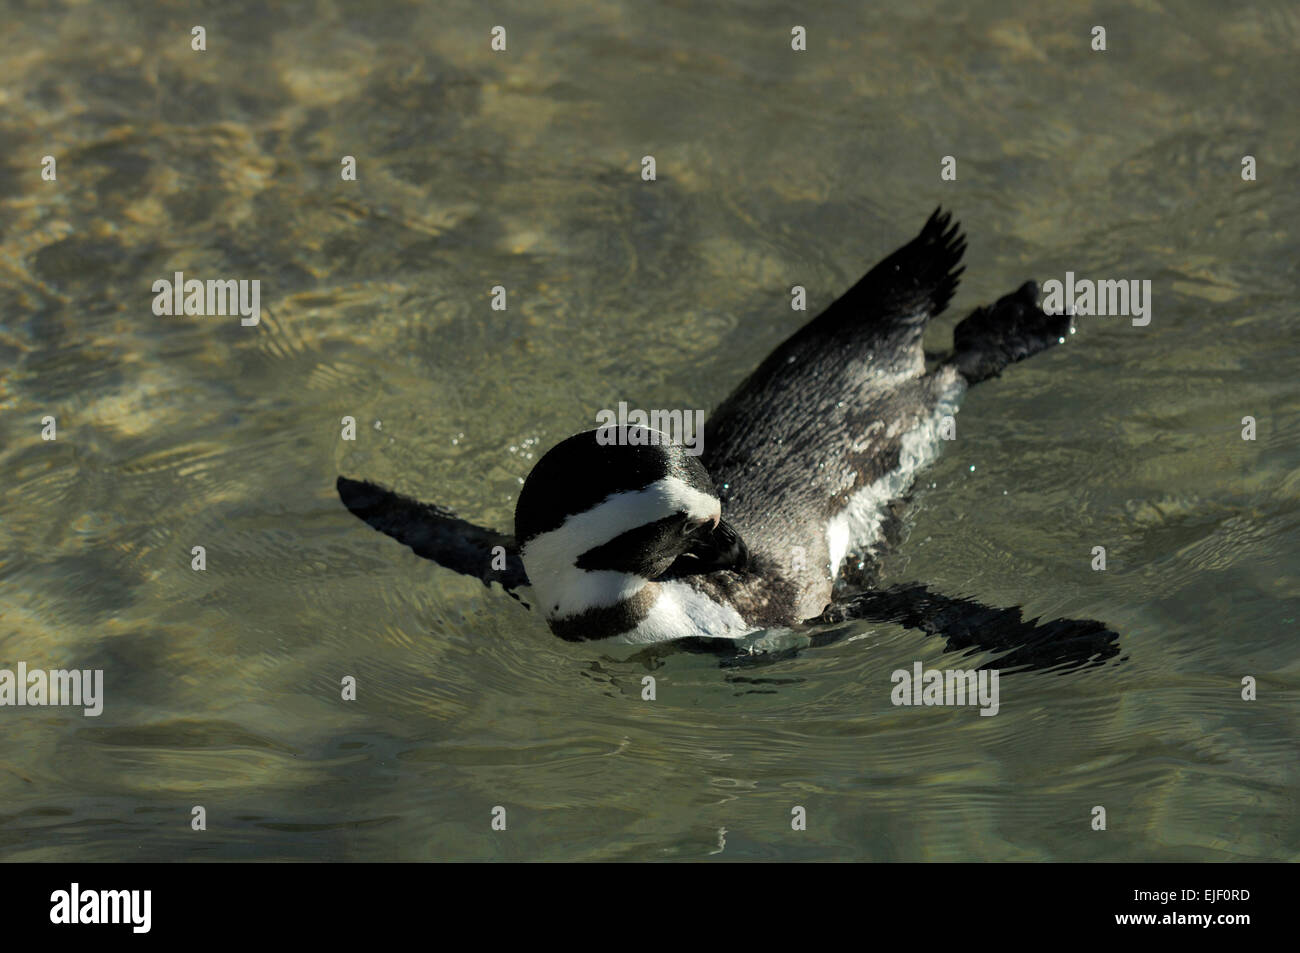 The African Penguin (Spheniscus demersus), on Boulders Beach Stock Photo